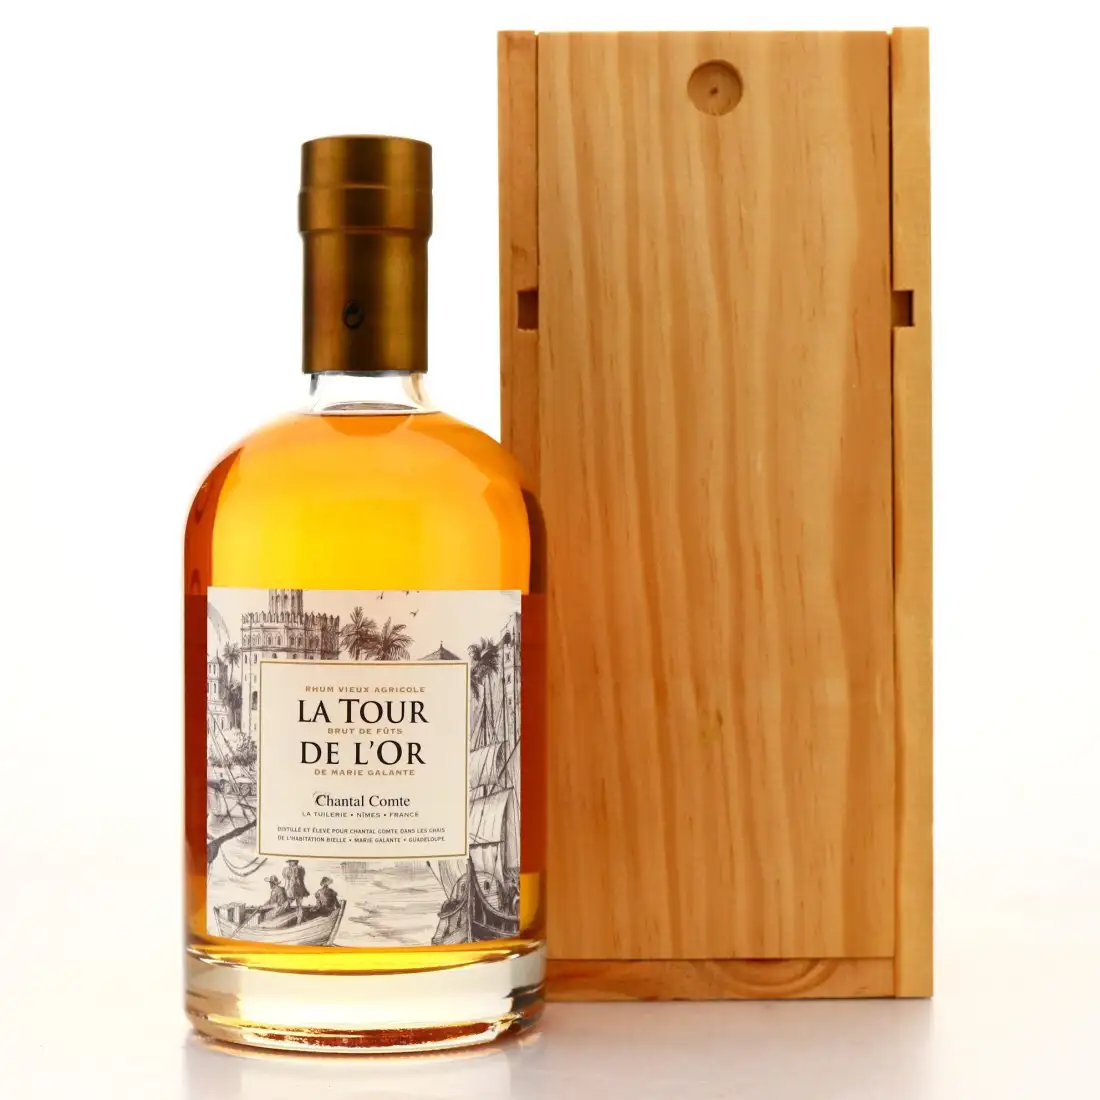 Image of the front of the bottle of the rum La Tour De L‘Or